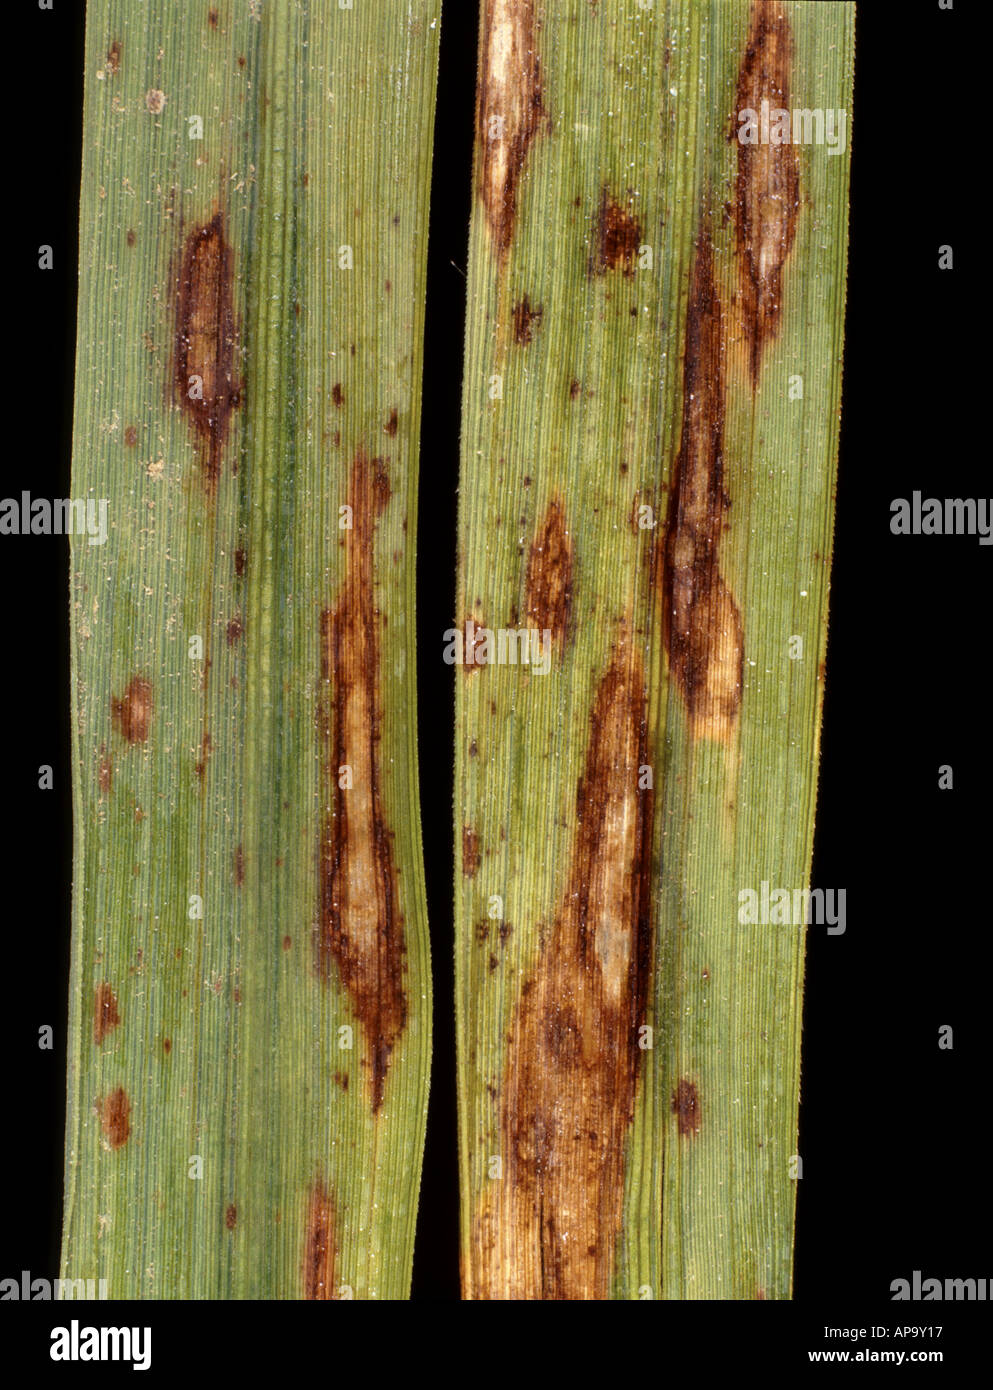 Rice blast Pyricularia grisea on rice leaves Stock Photo